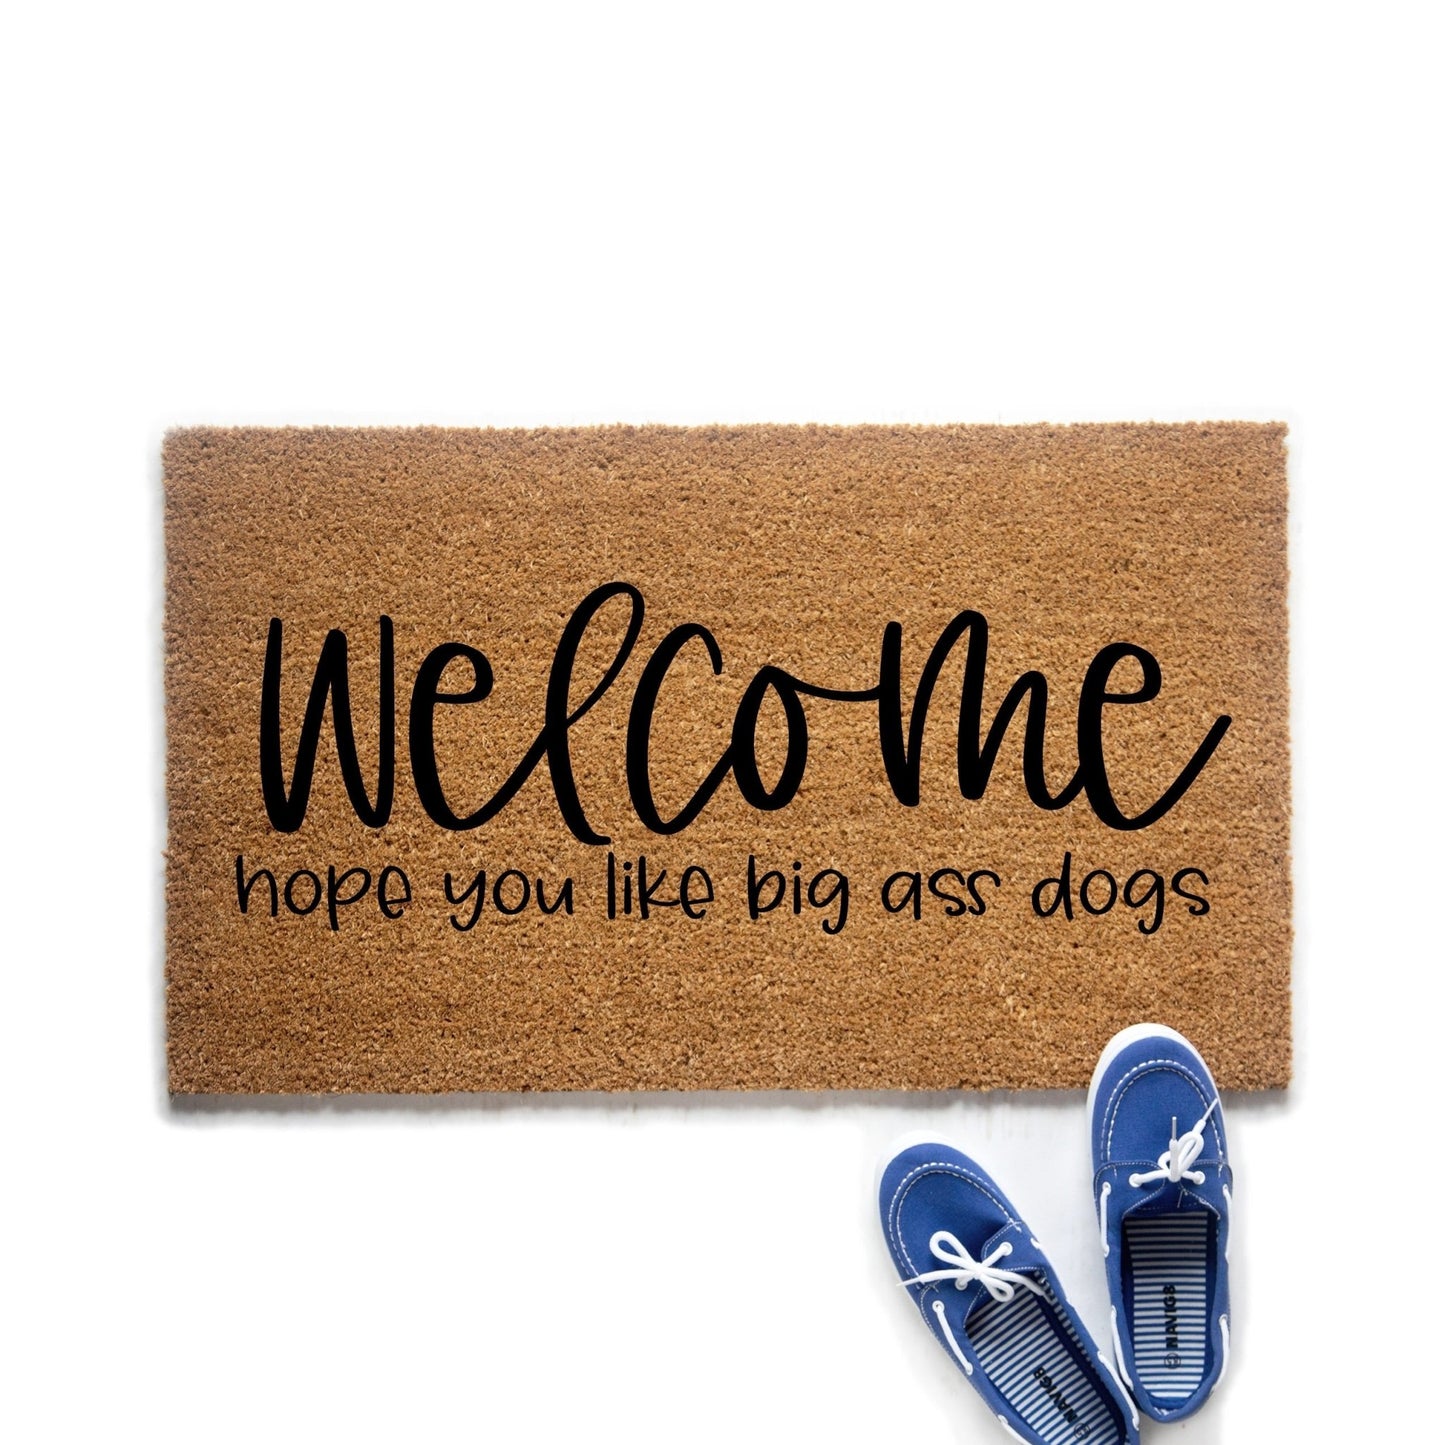 Welcome Hope You Like Big Ass Dogs Doormat